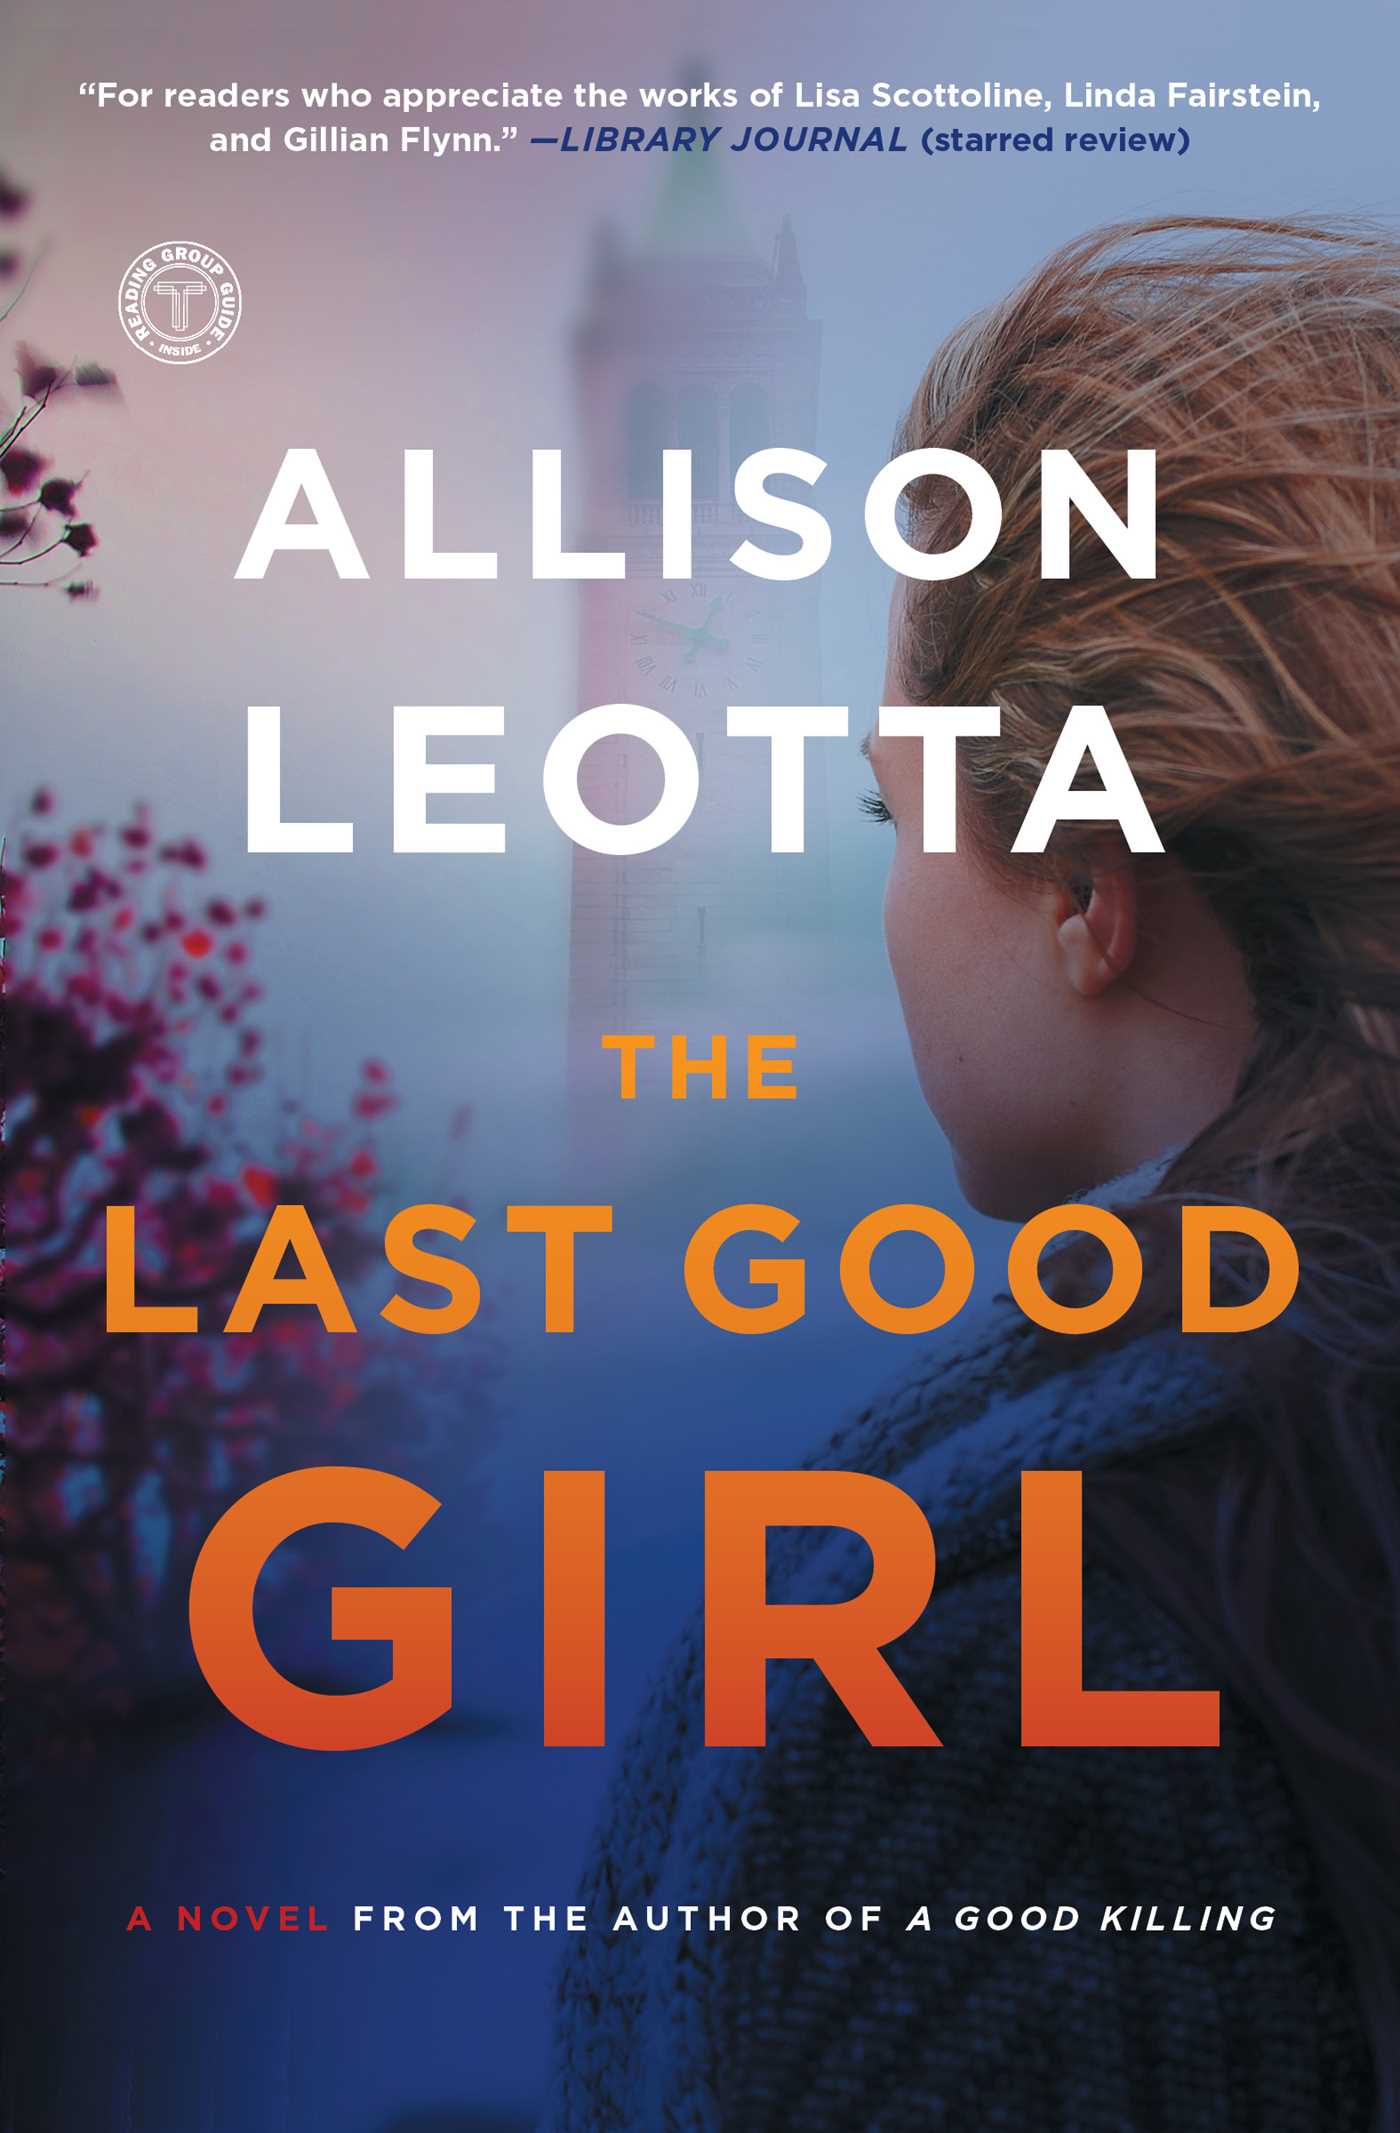 The Last Good Girl